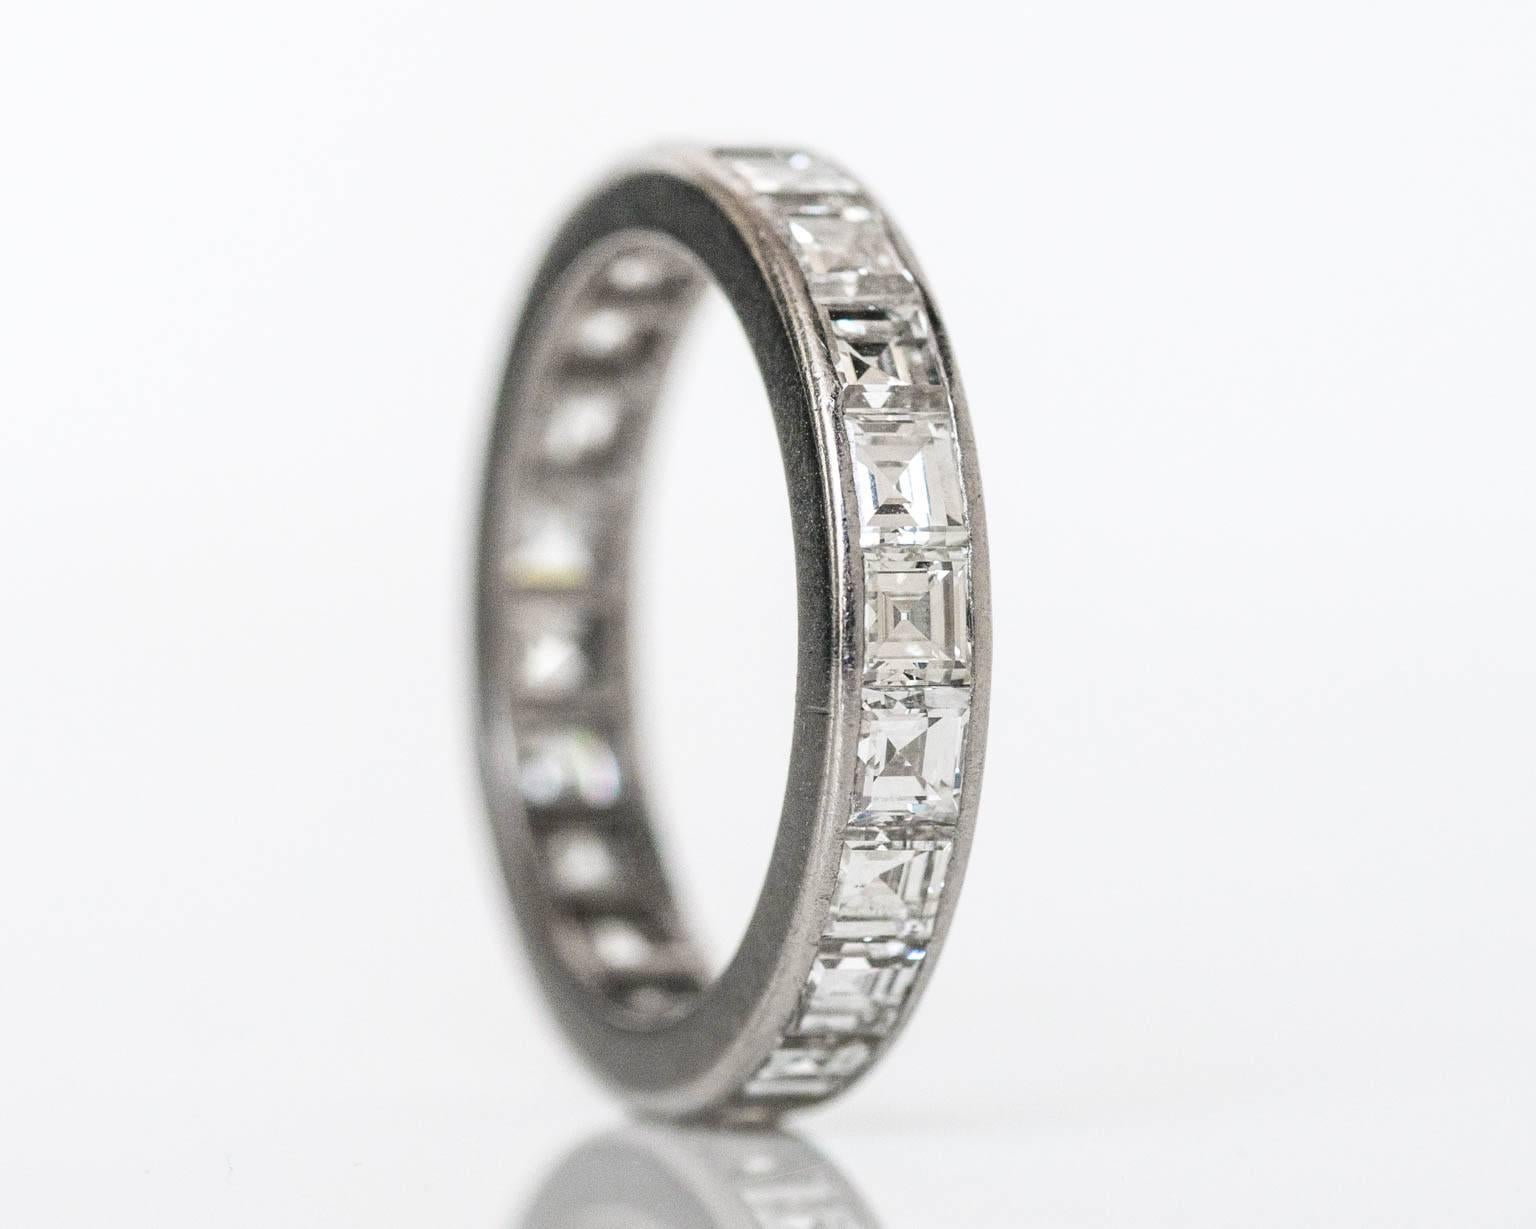 Art Deco Tiffany & Co. Wedding Band

Item Details: 
Ring Size: 5.5
Metal Type: Platinum
Weight: 4.6 grams

Diamond Details:
Shape: Carre Cut (Antique Asscher Cut)
Carat Weight: 3.50 carat, total weight
Color: F
Clarity: VS1